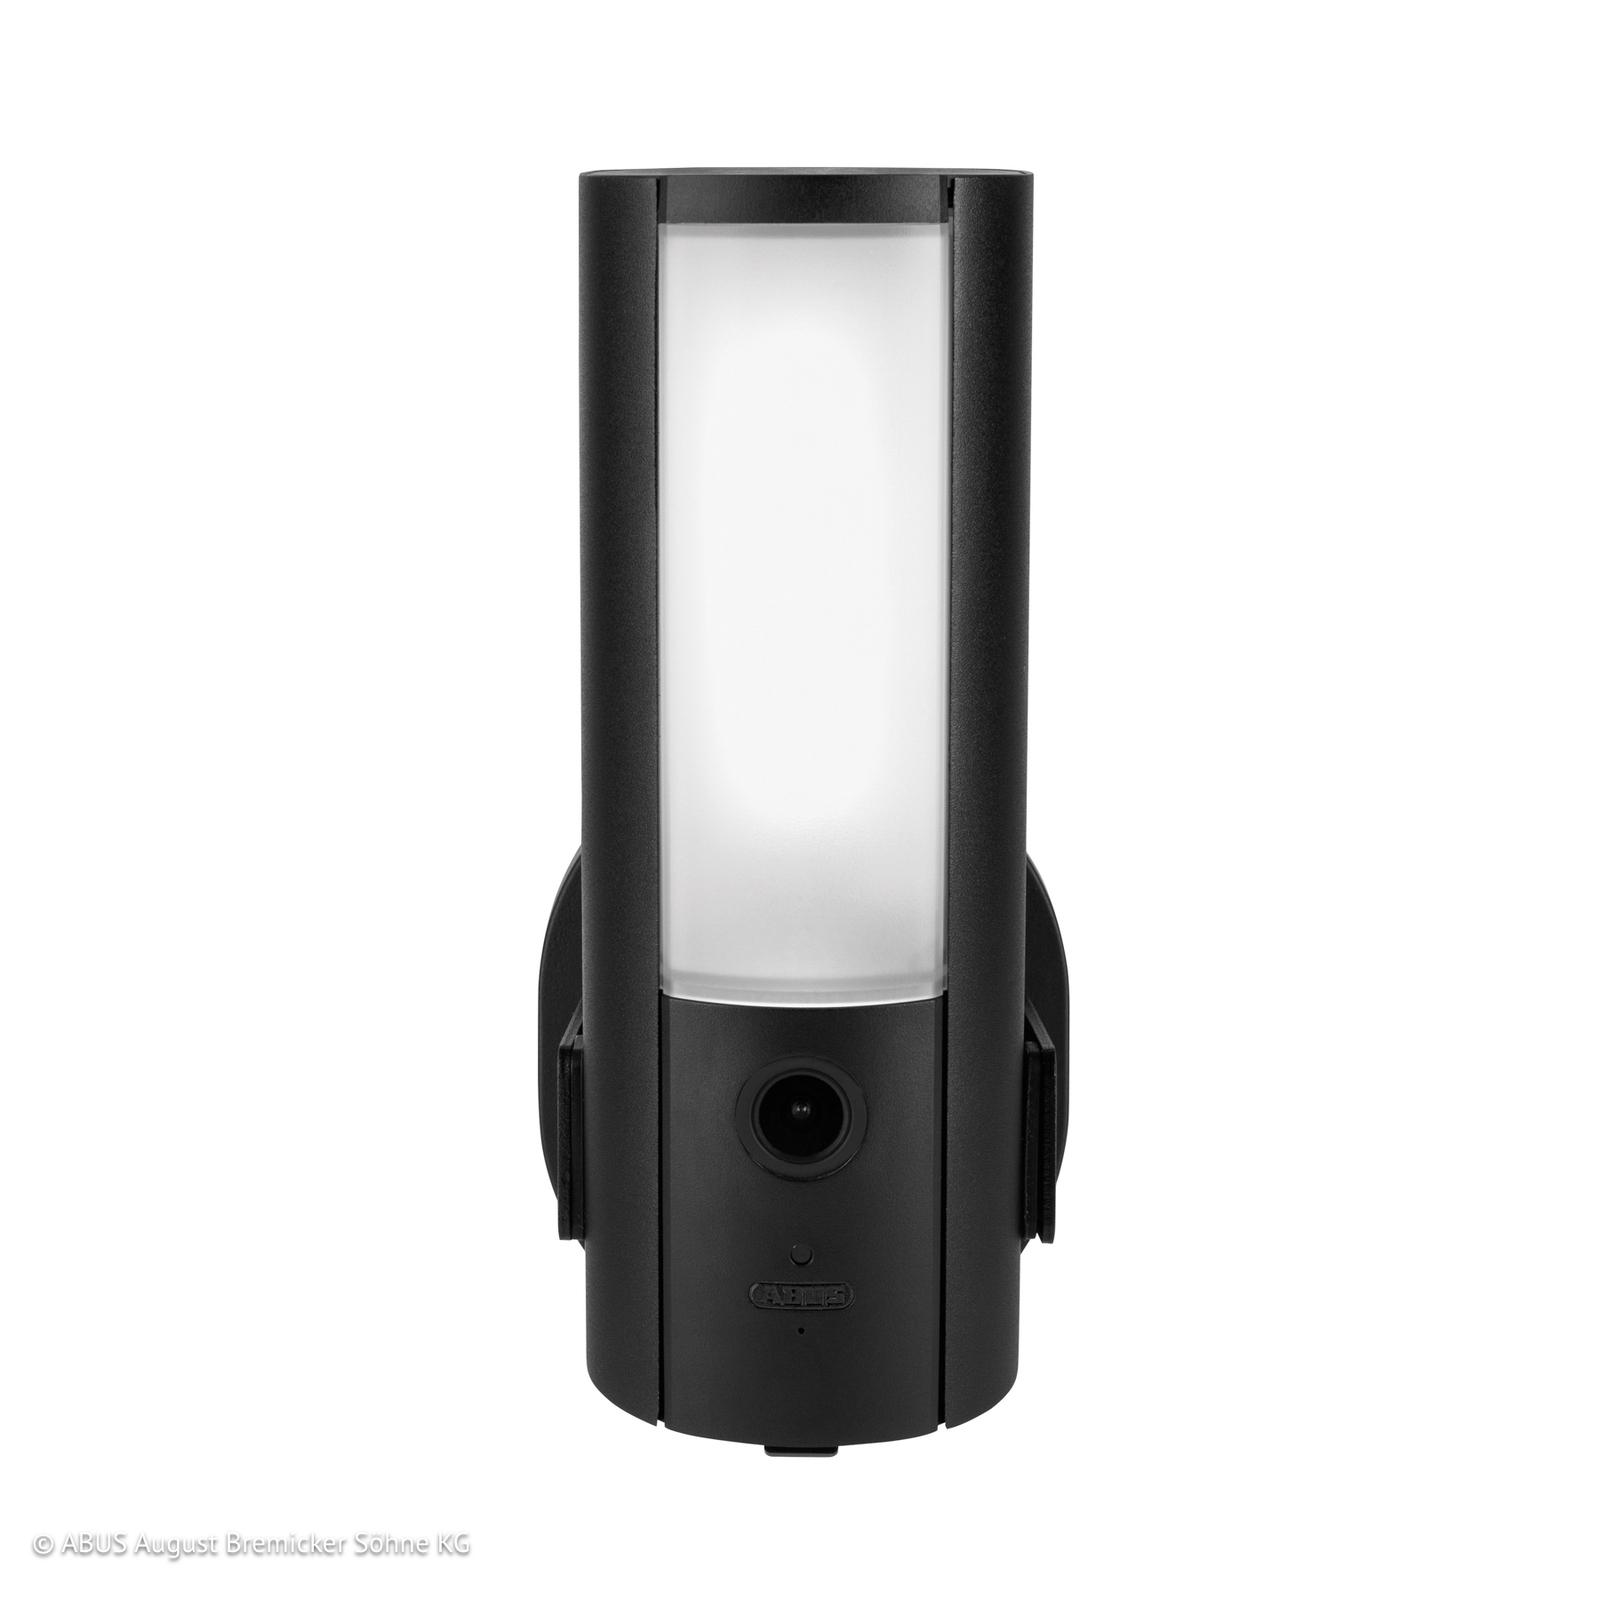 ABUS Smart WLAN outdoor light camera IP66 black